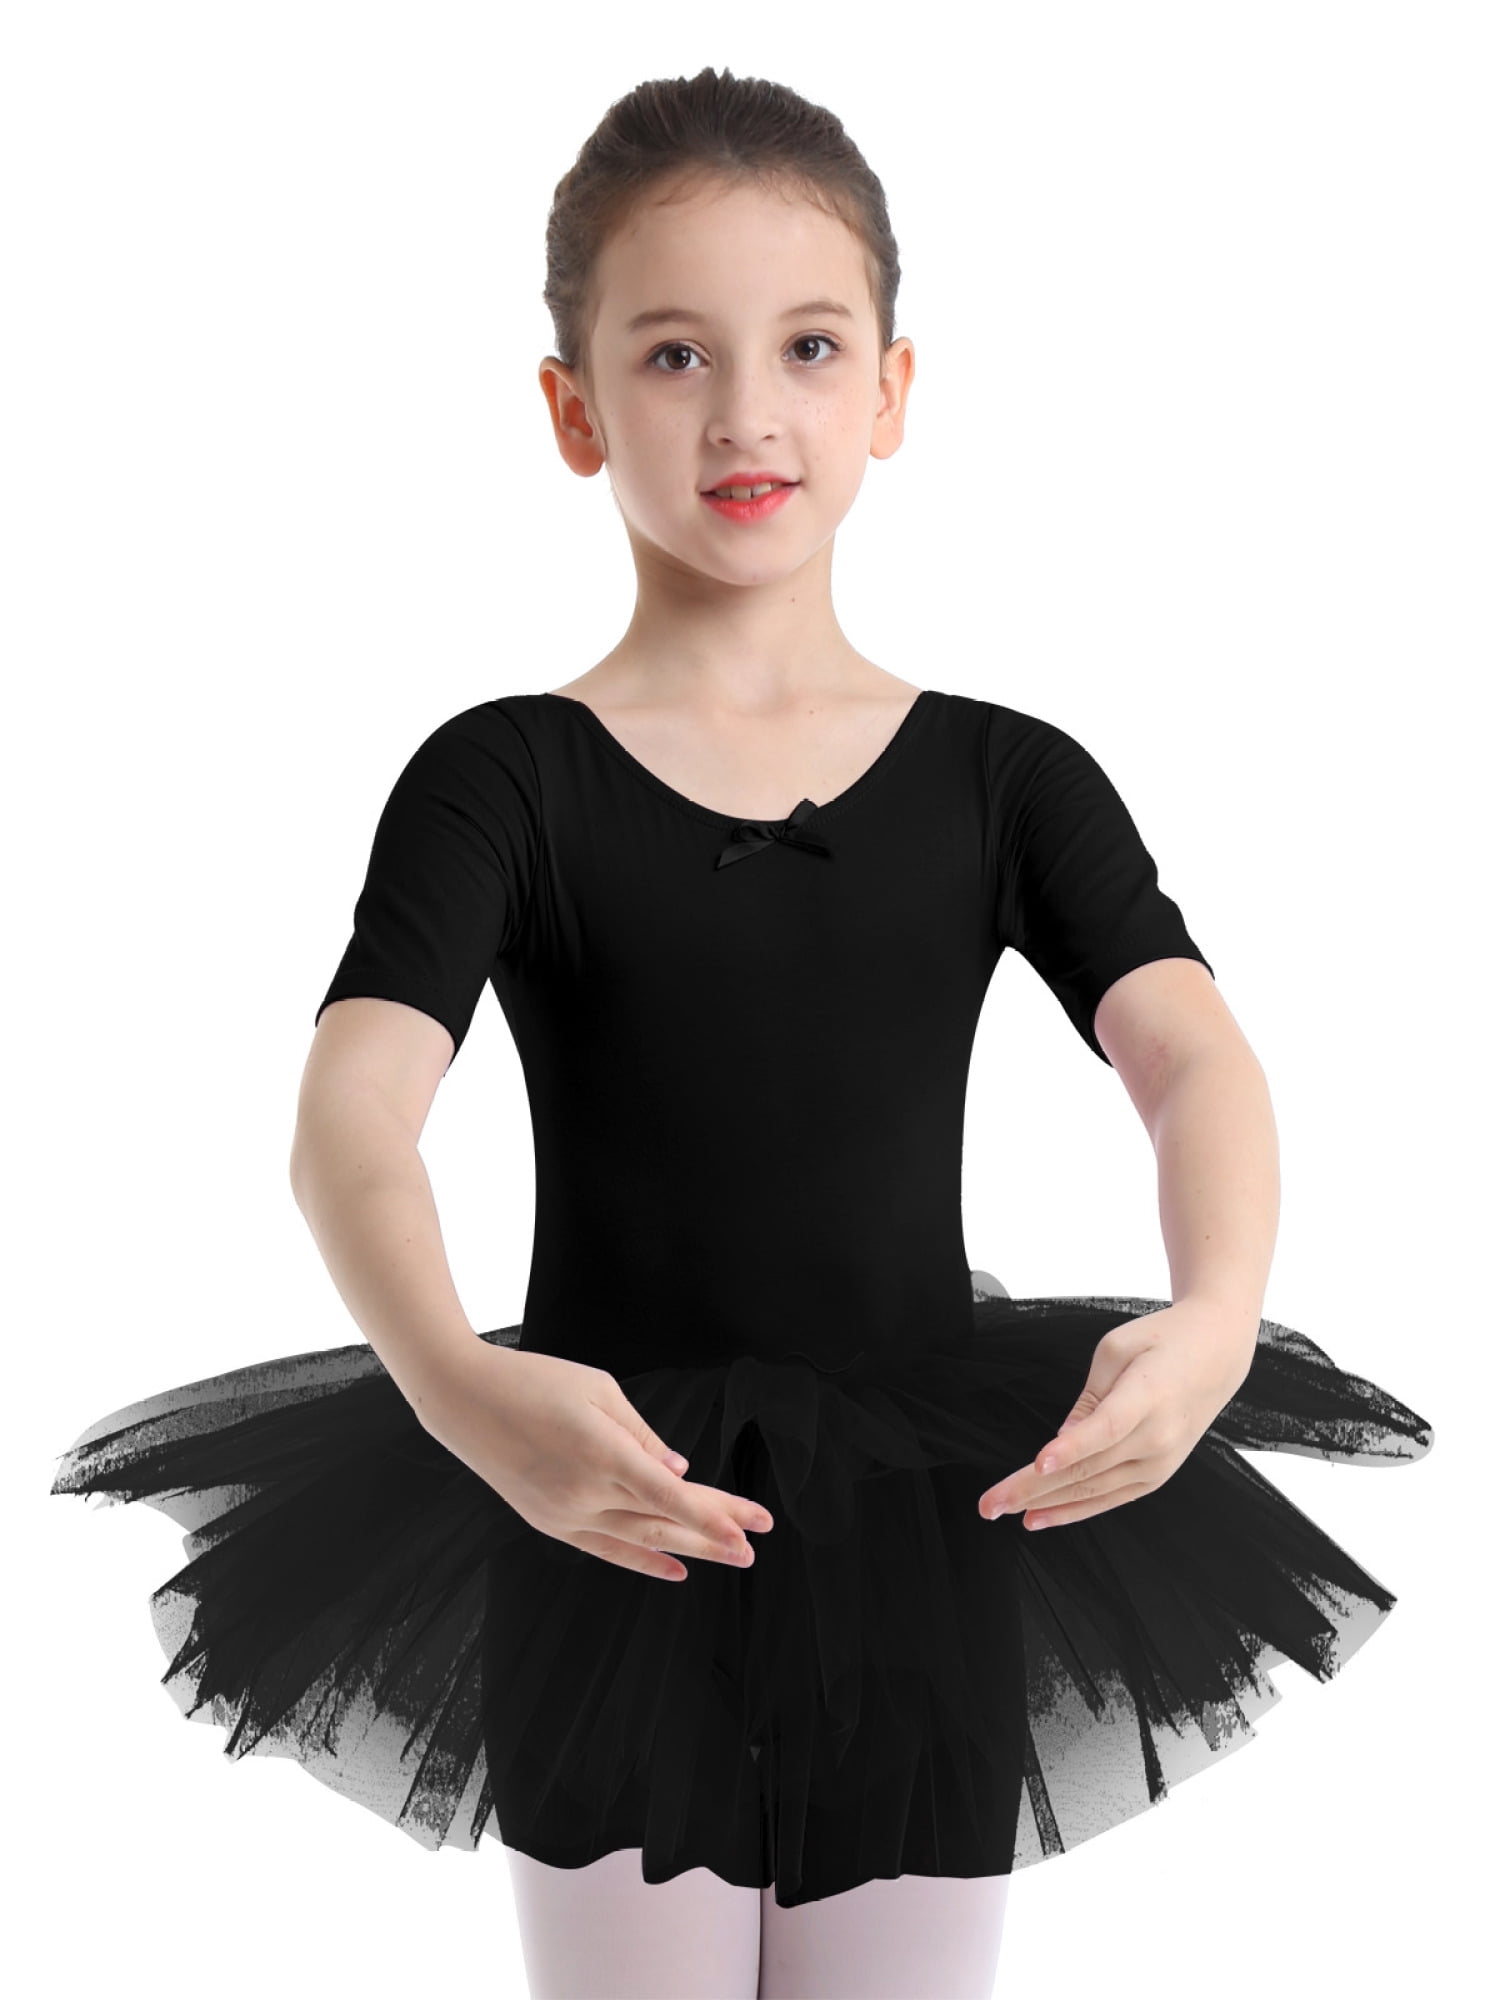 Girls Kids Dance Outfit Ballet Jazz Costume Gymnastic Athletic Leotard Dancewear 